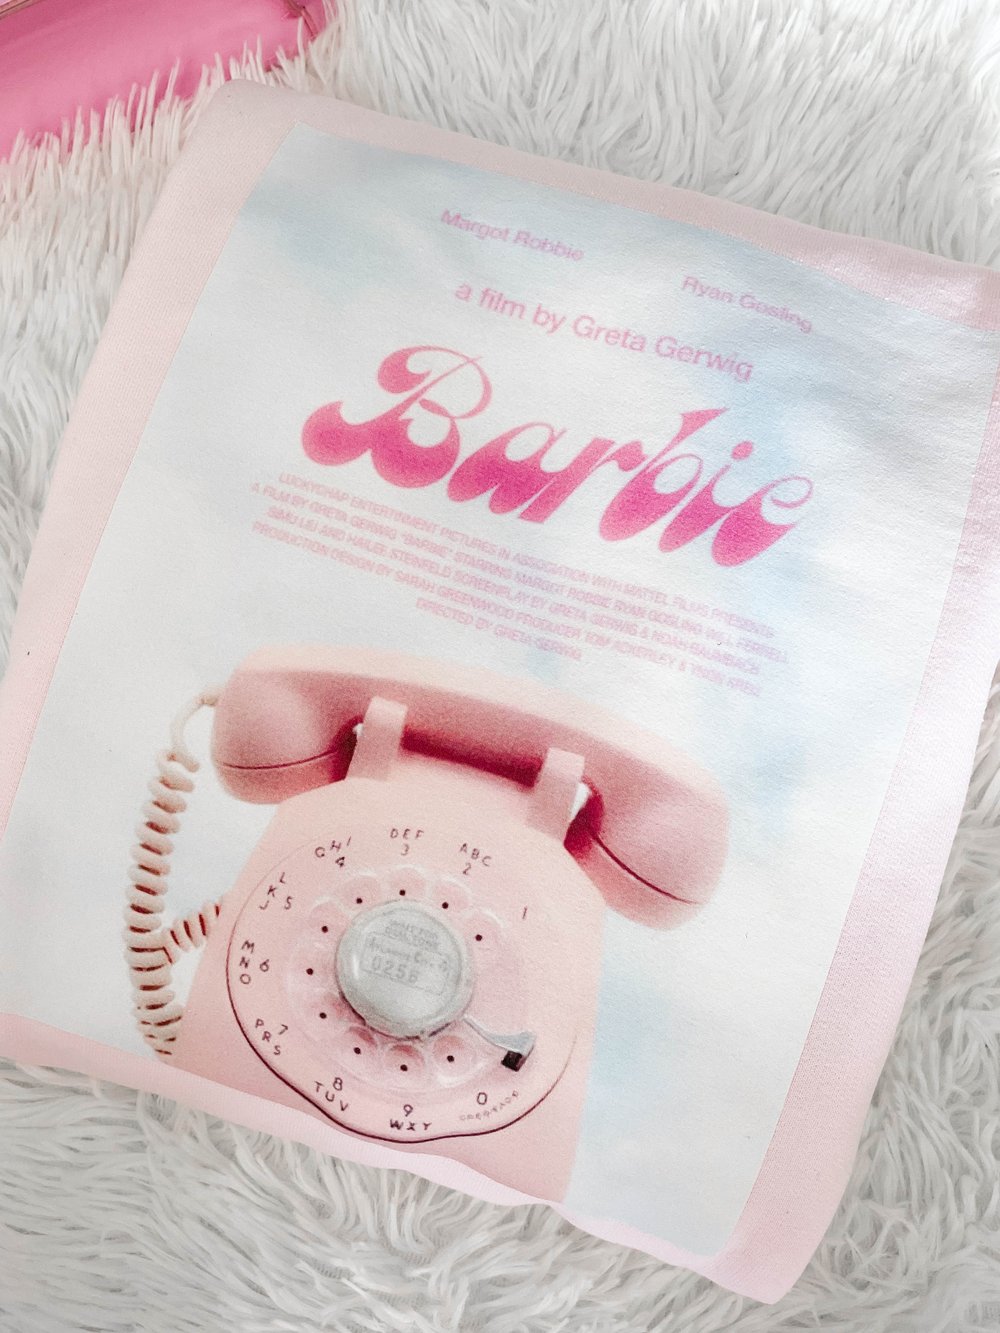 Barbie Phone